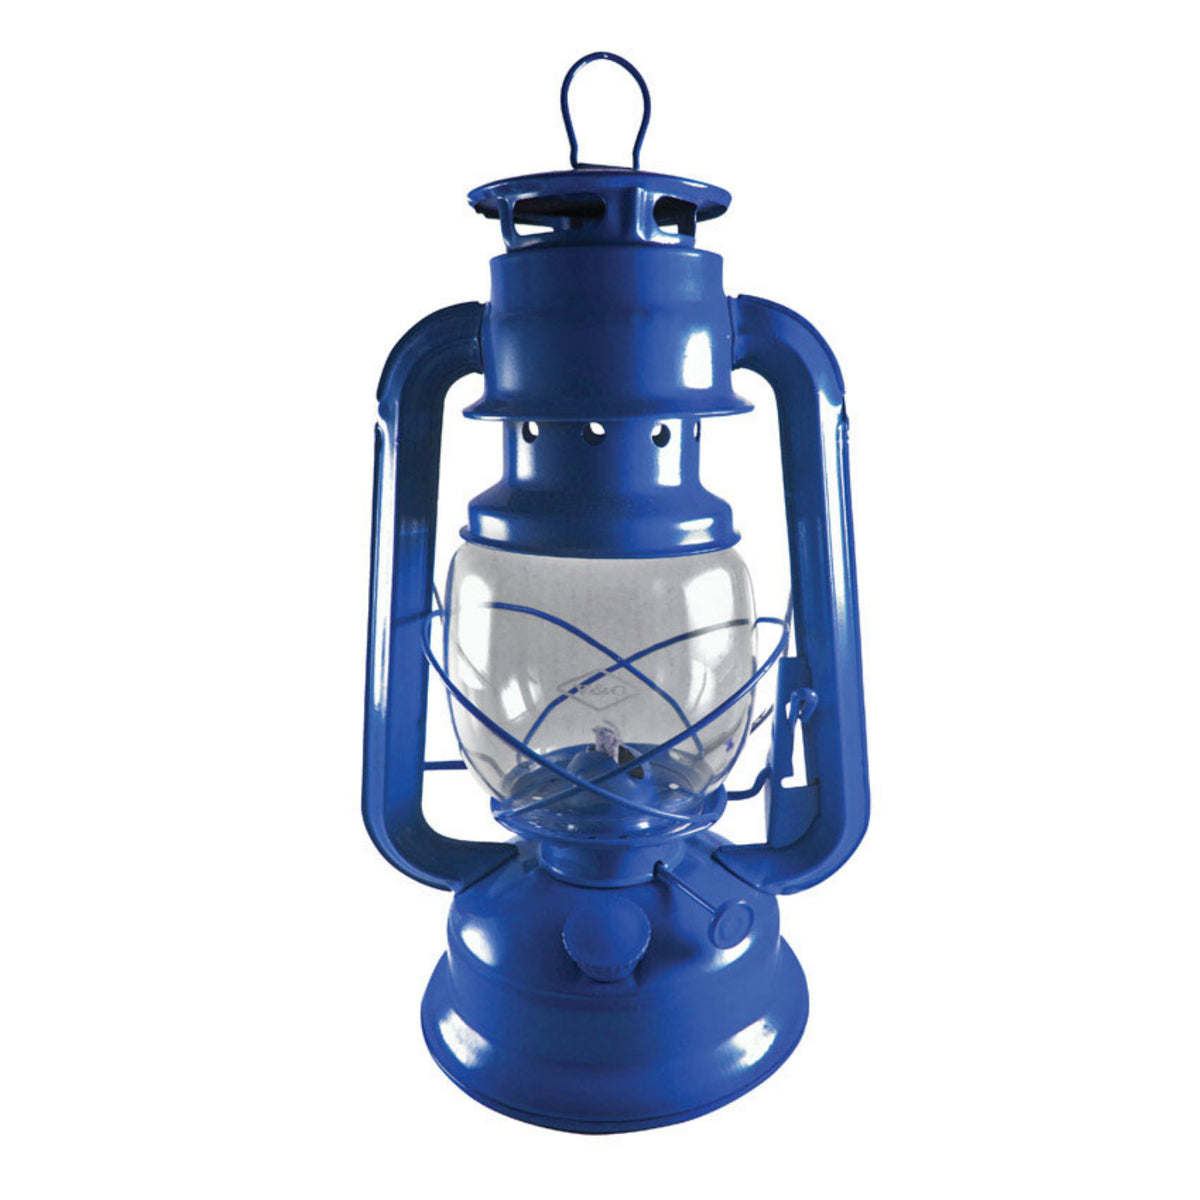 buy outdoor lanterns at cheap rate in bulk. wholesale & retail lawn & garden maintenance & décor store.